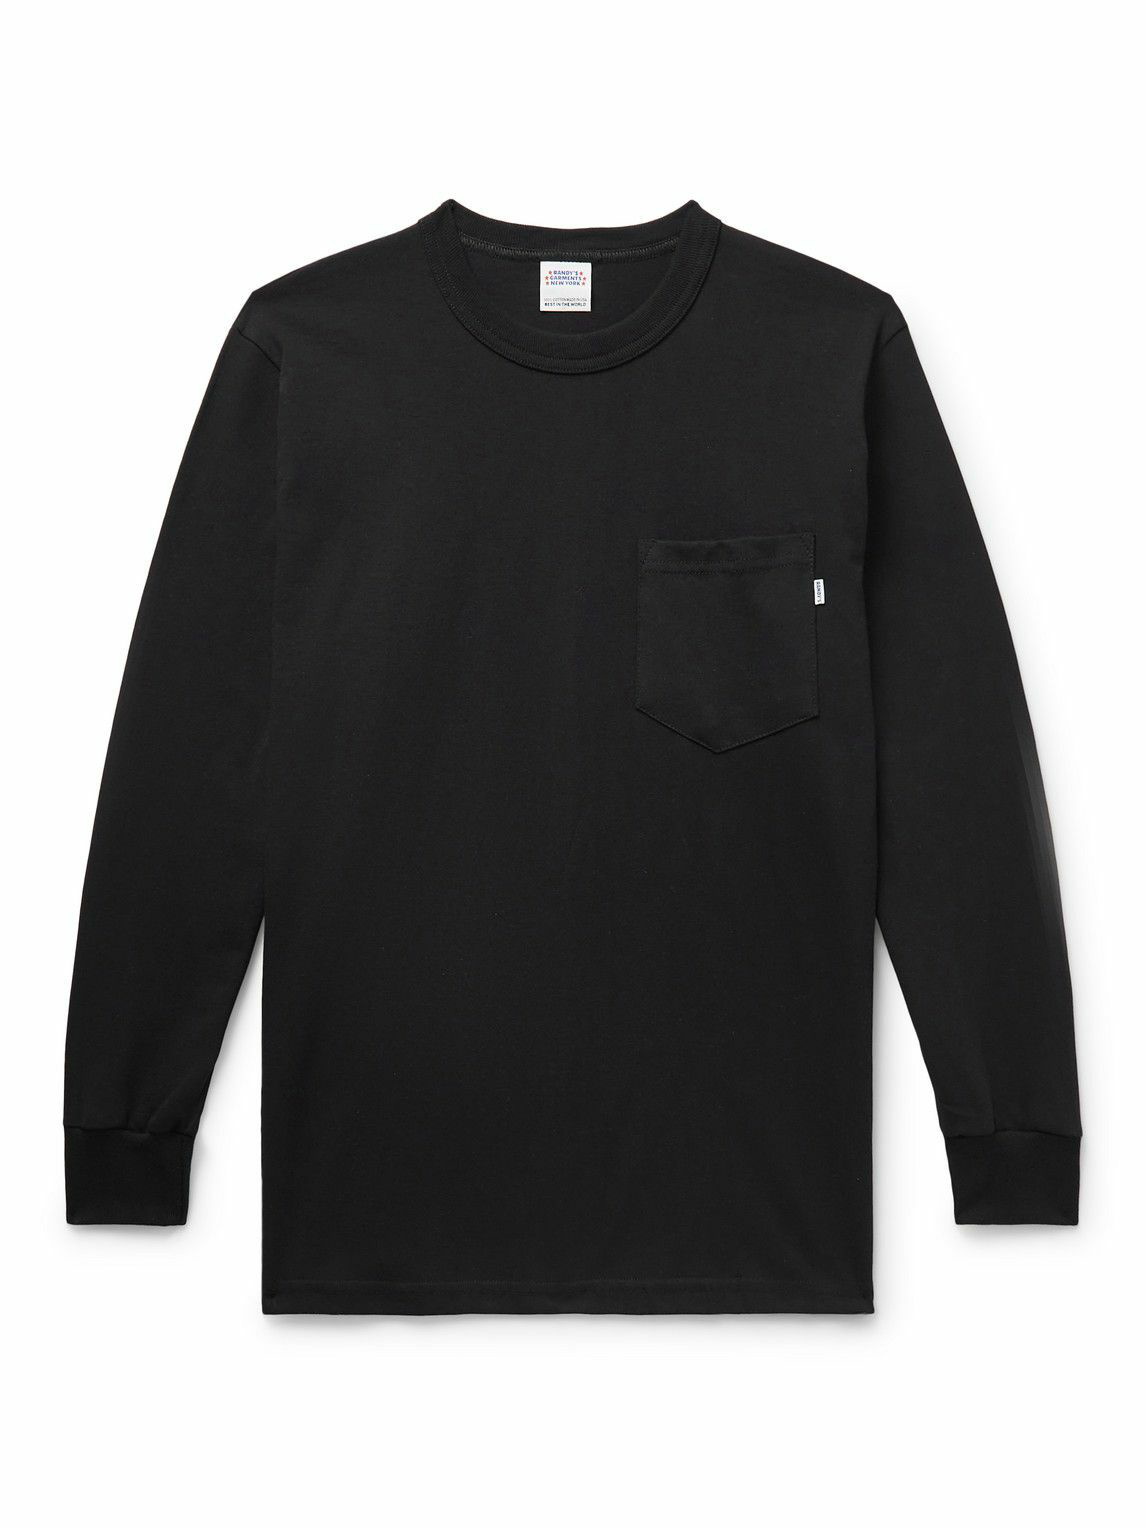 ROUGH DRESS Pima Cotton Blend Crew Neck Long Sleeves Black T-shirt - Large